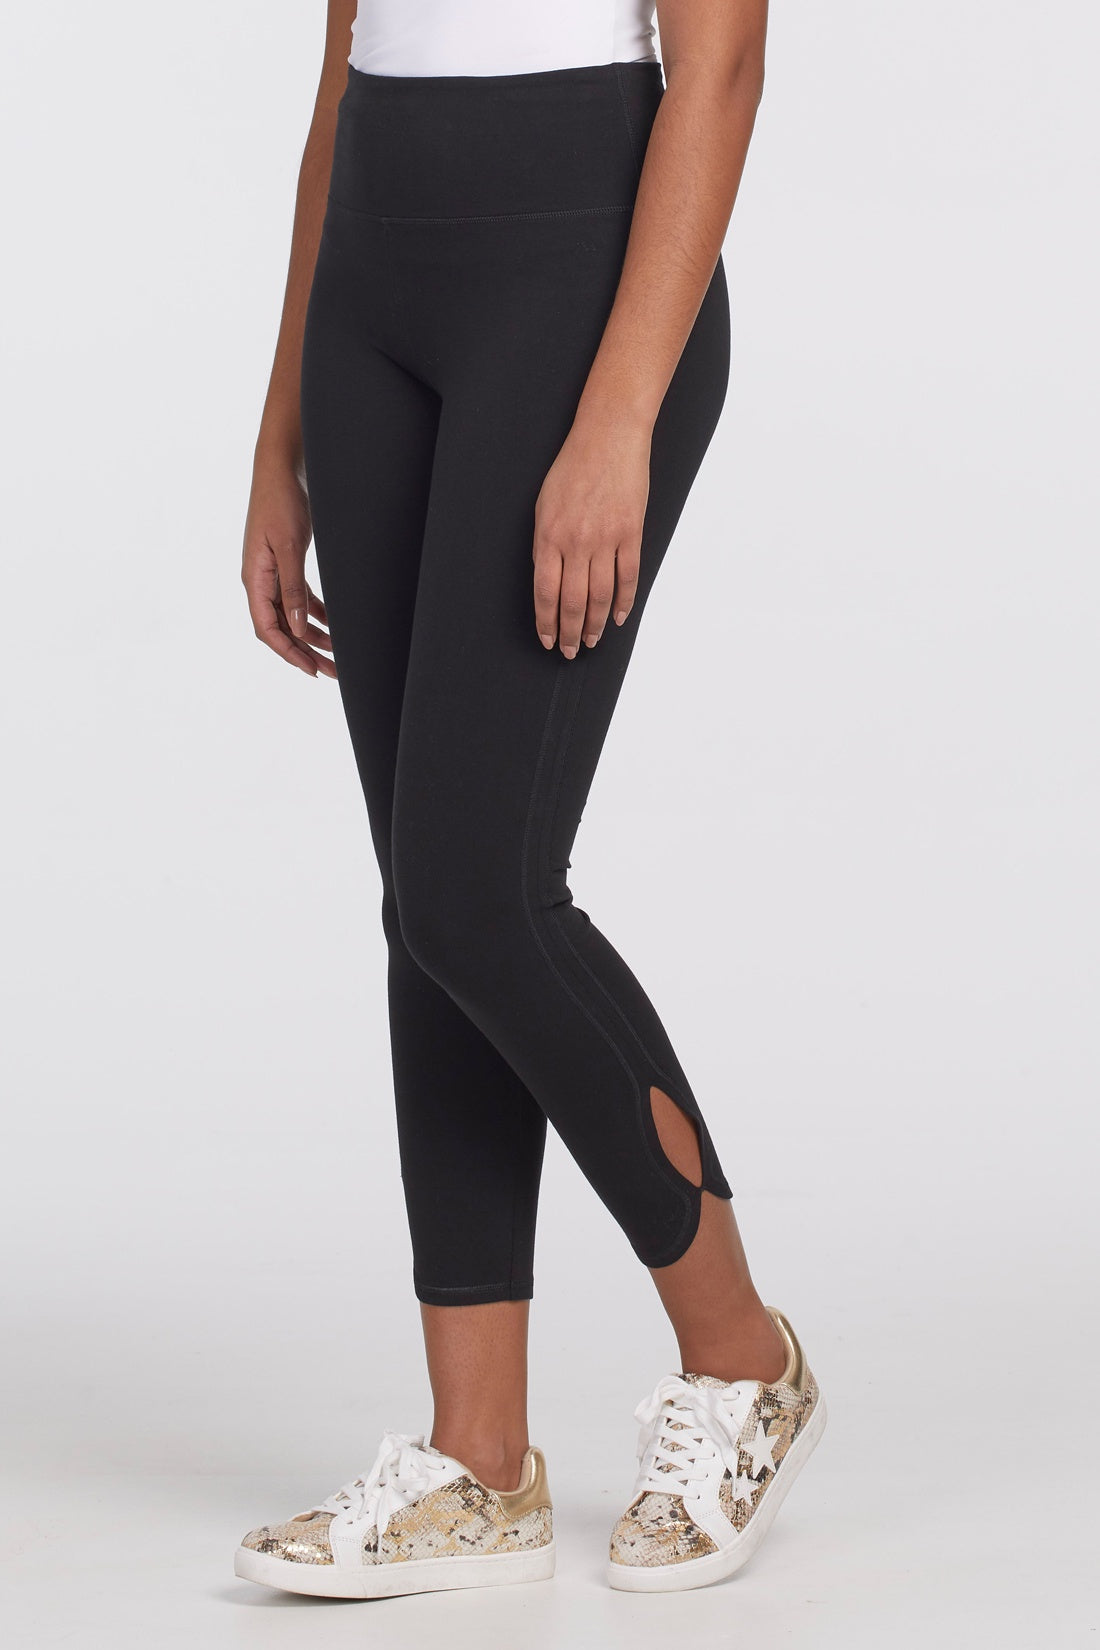 Black Diamond Cutout Crop Legging | Plus size outfits, Plus size leggings,  Womens fashion edgy